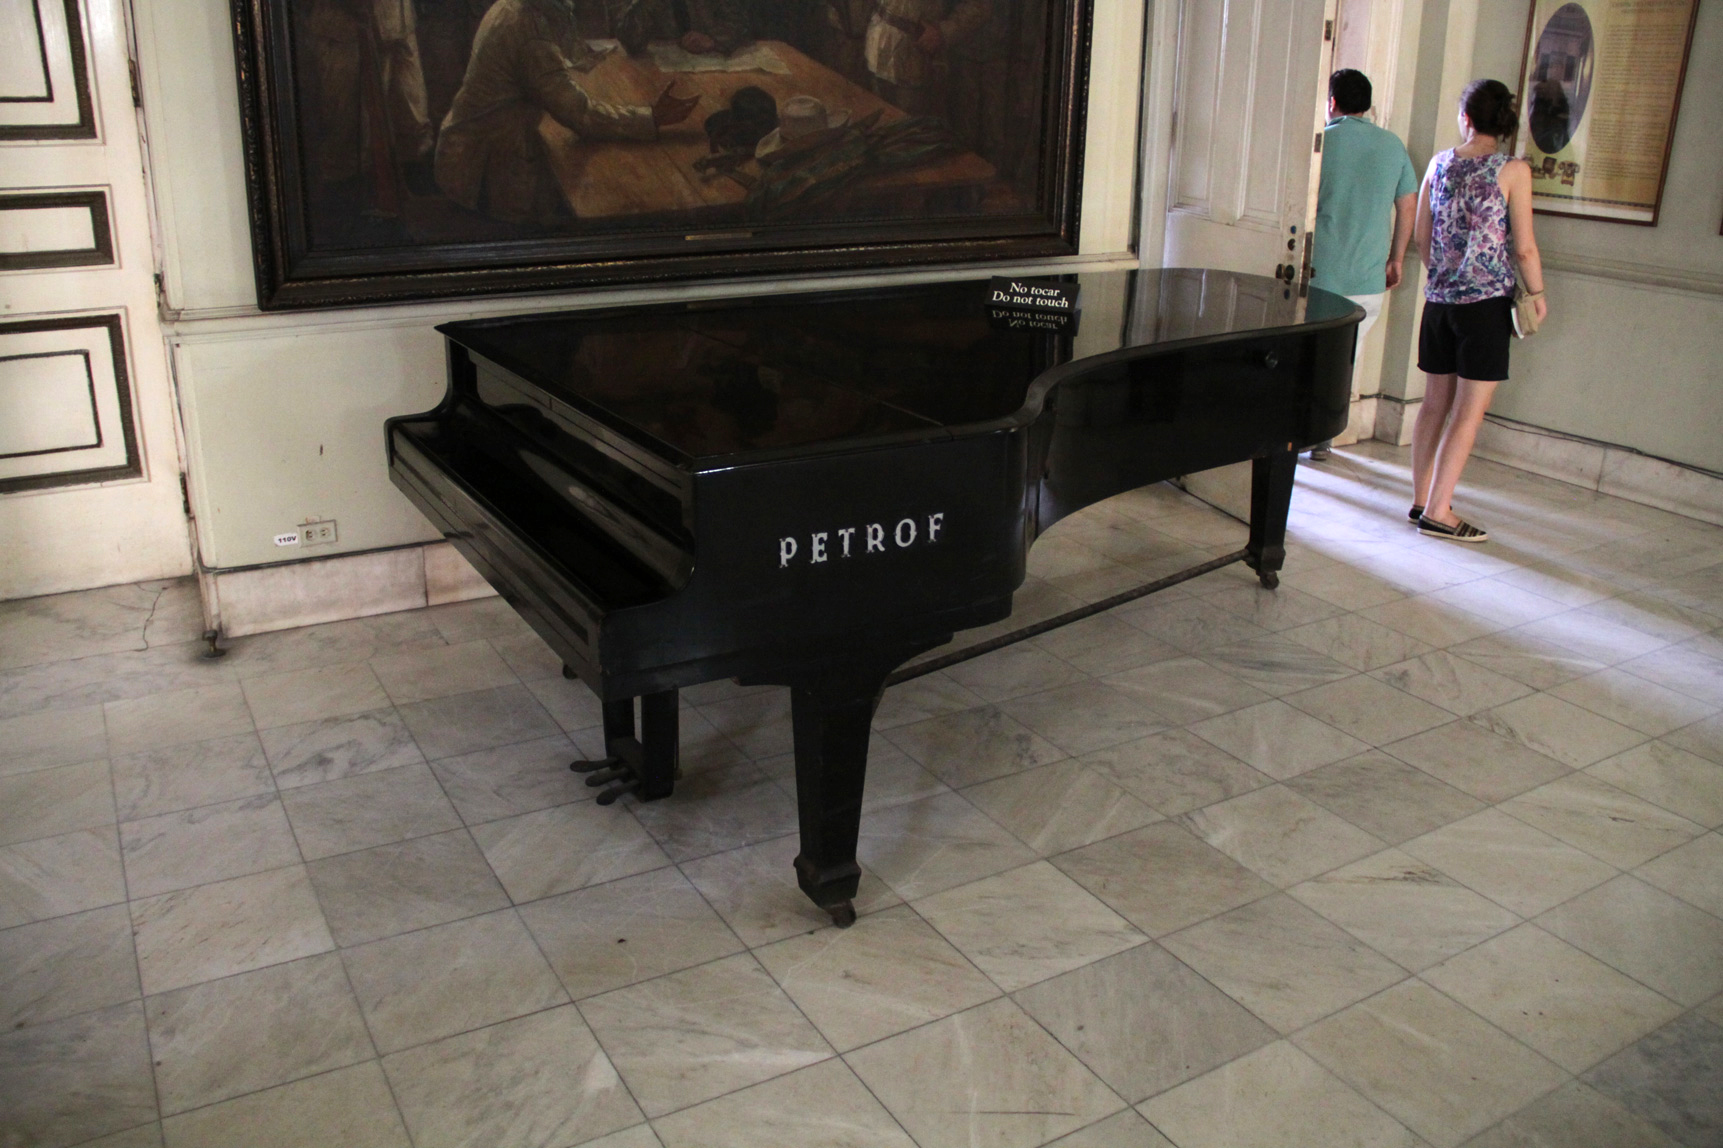 Petrof piano in the Museum of the Revolution, Cuba